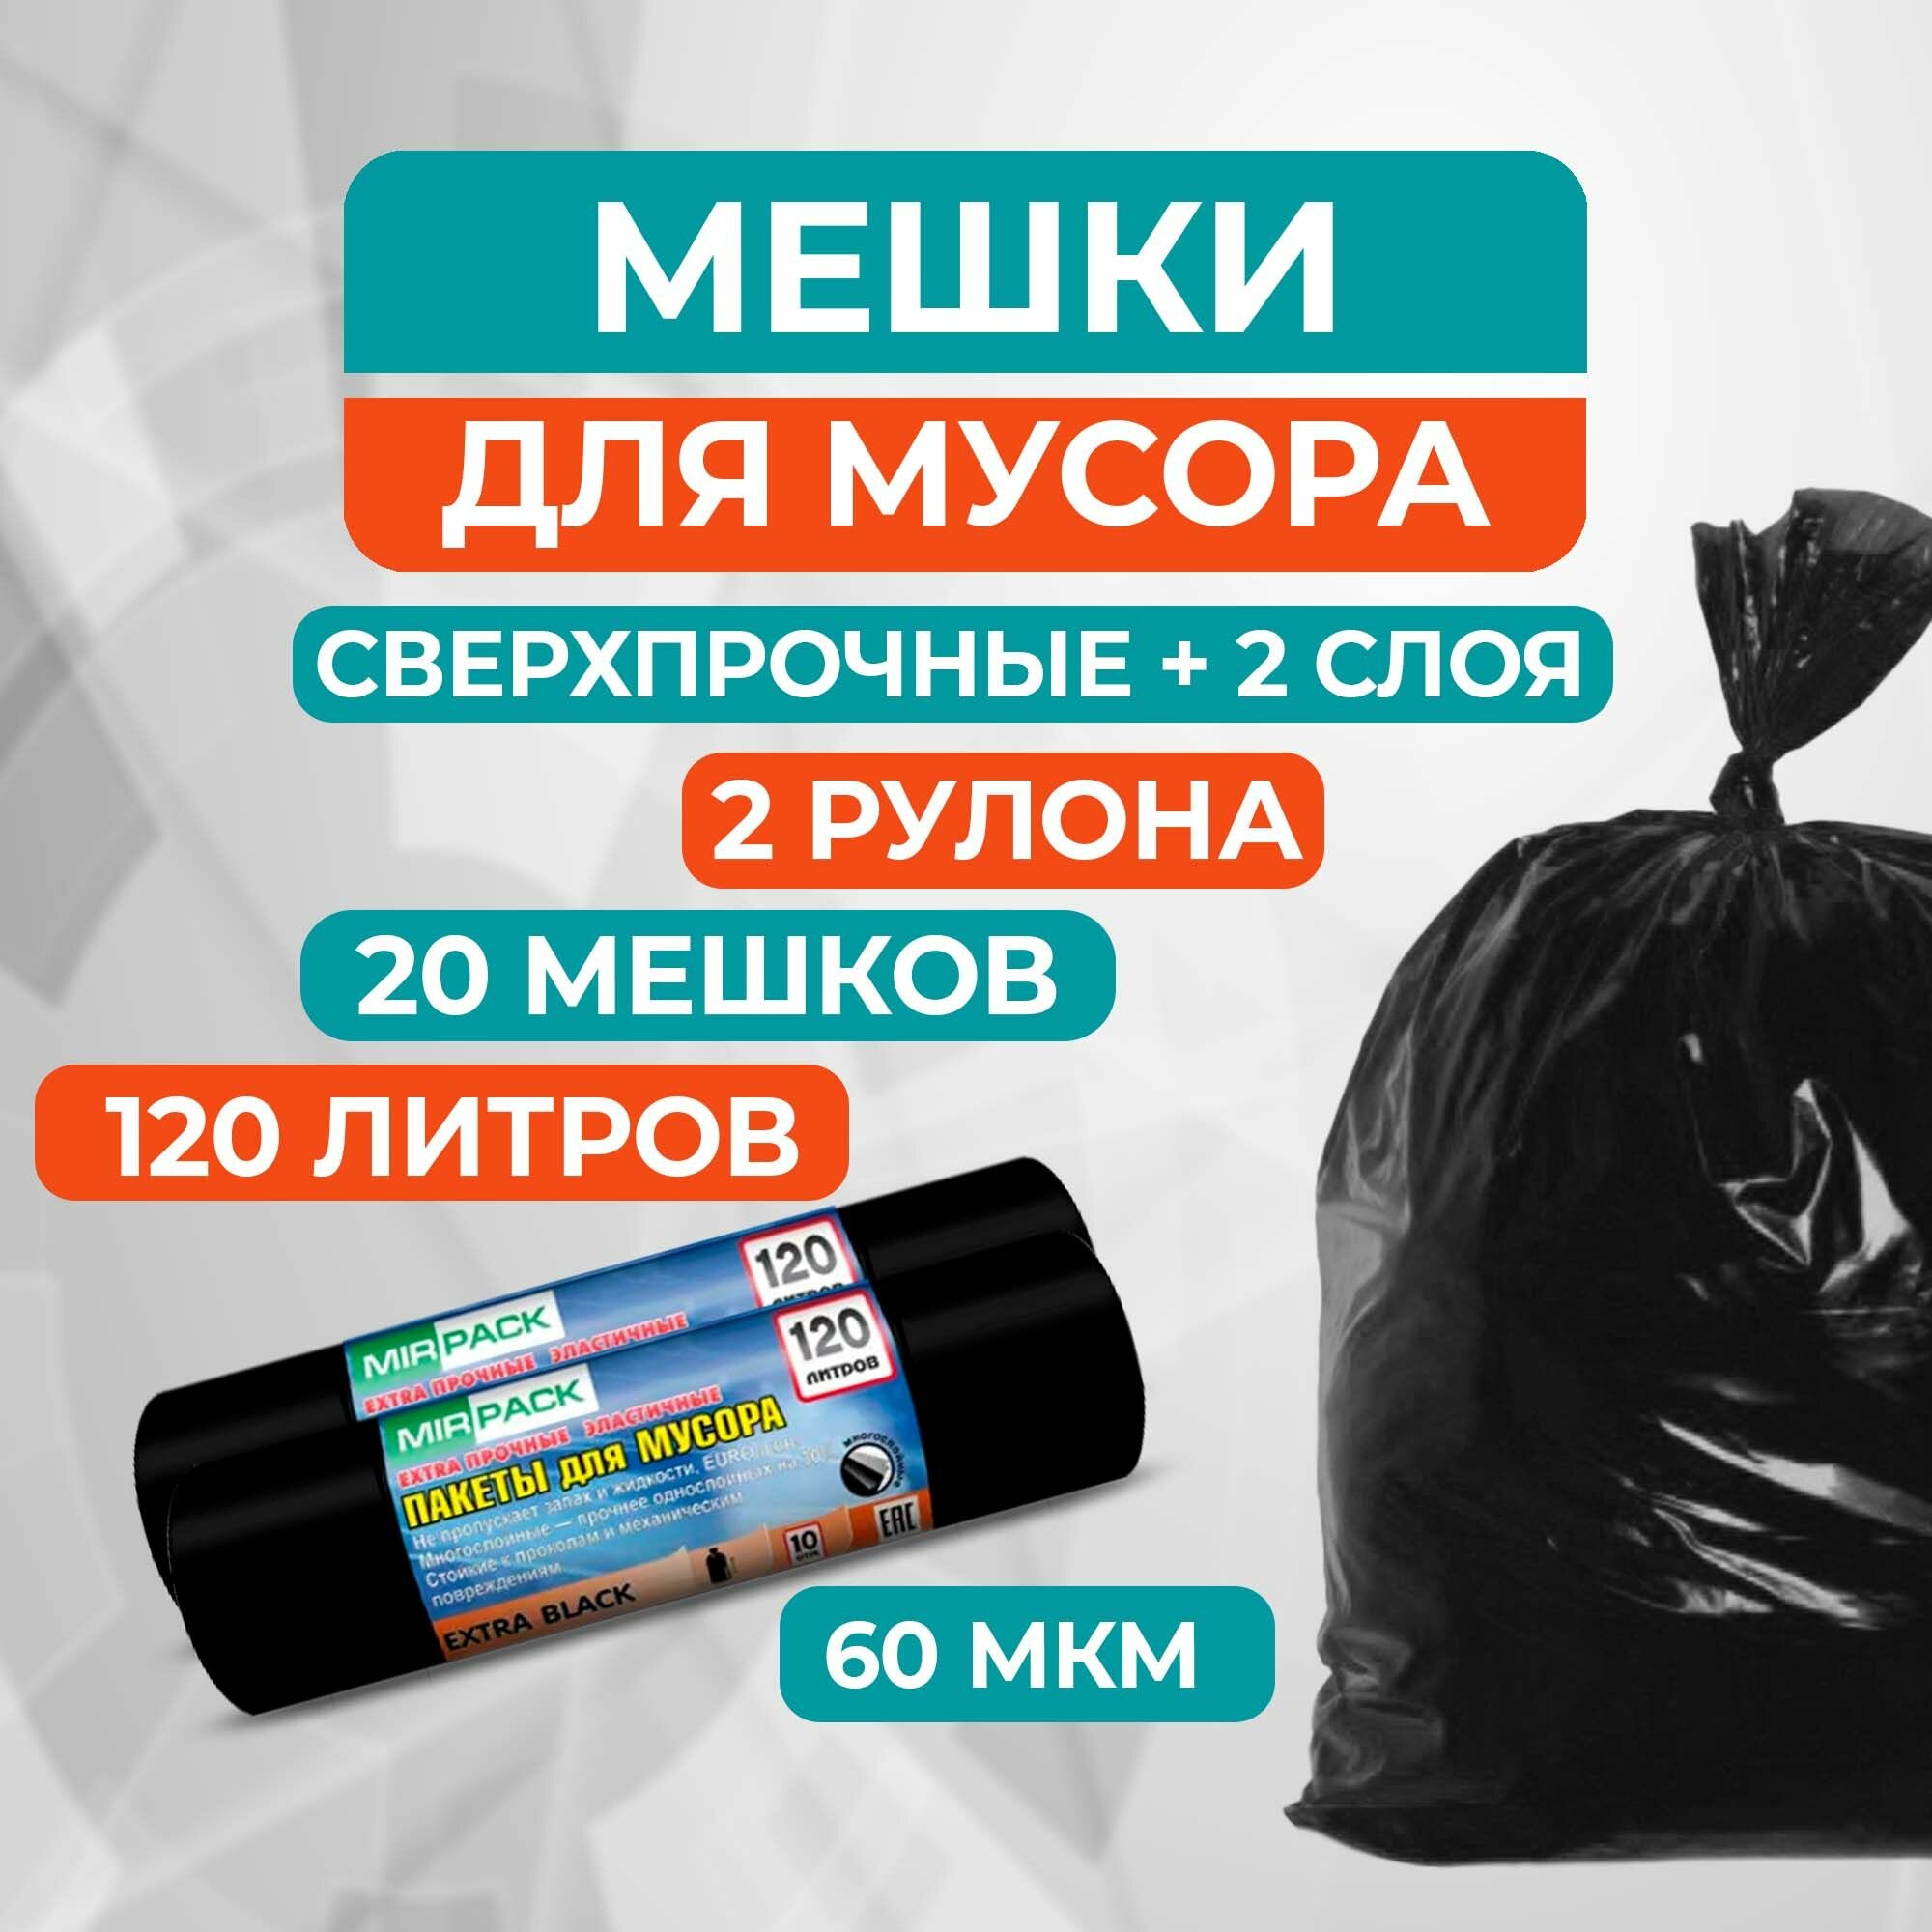 Мега прочные пакеты для мусора 120 л, размер 110x70, черные 2 рулона (20 шт), 60мкм